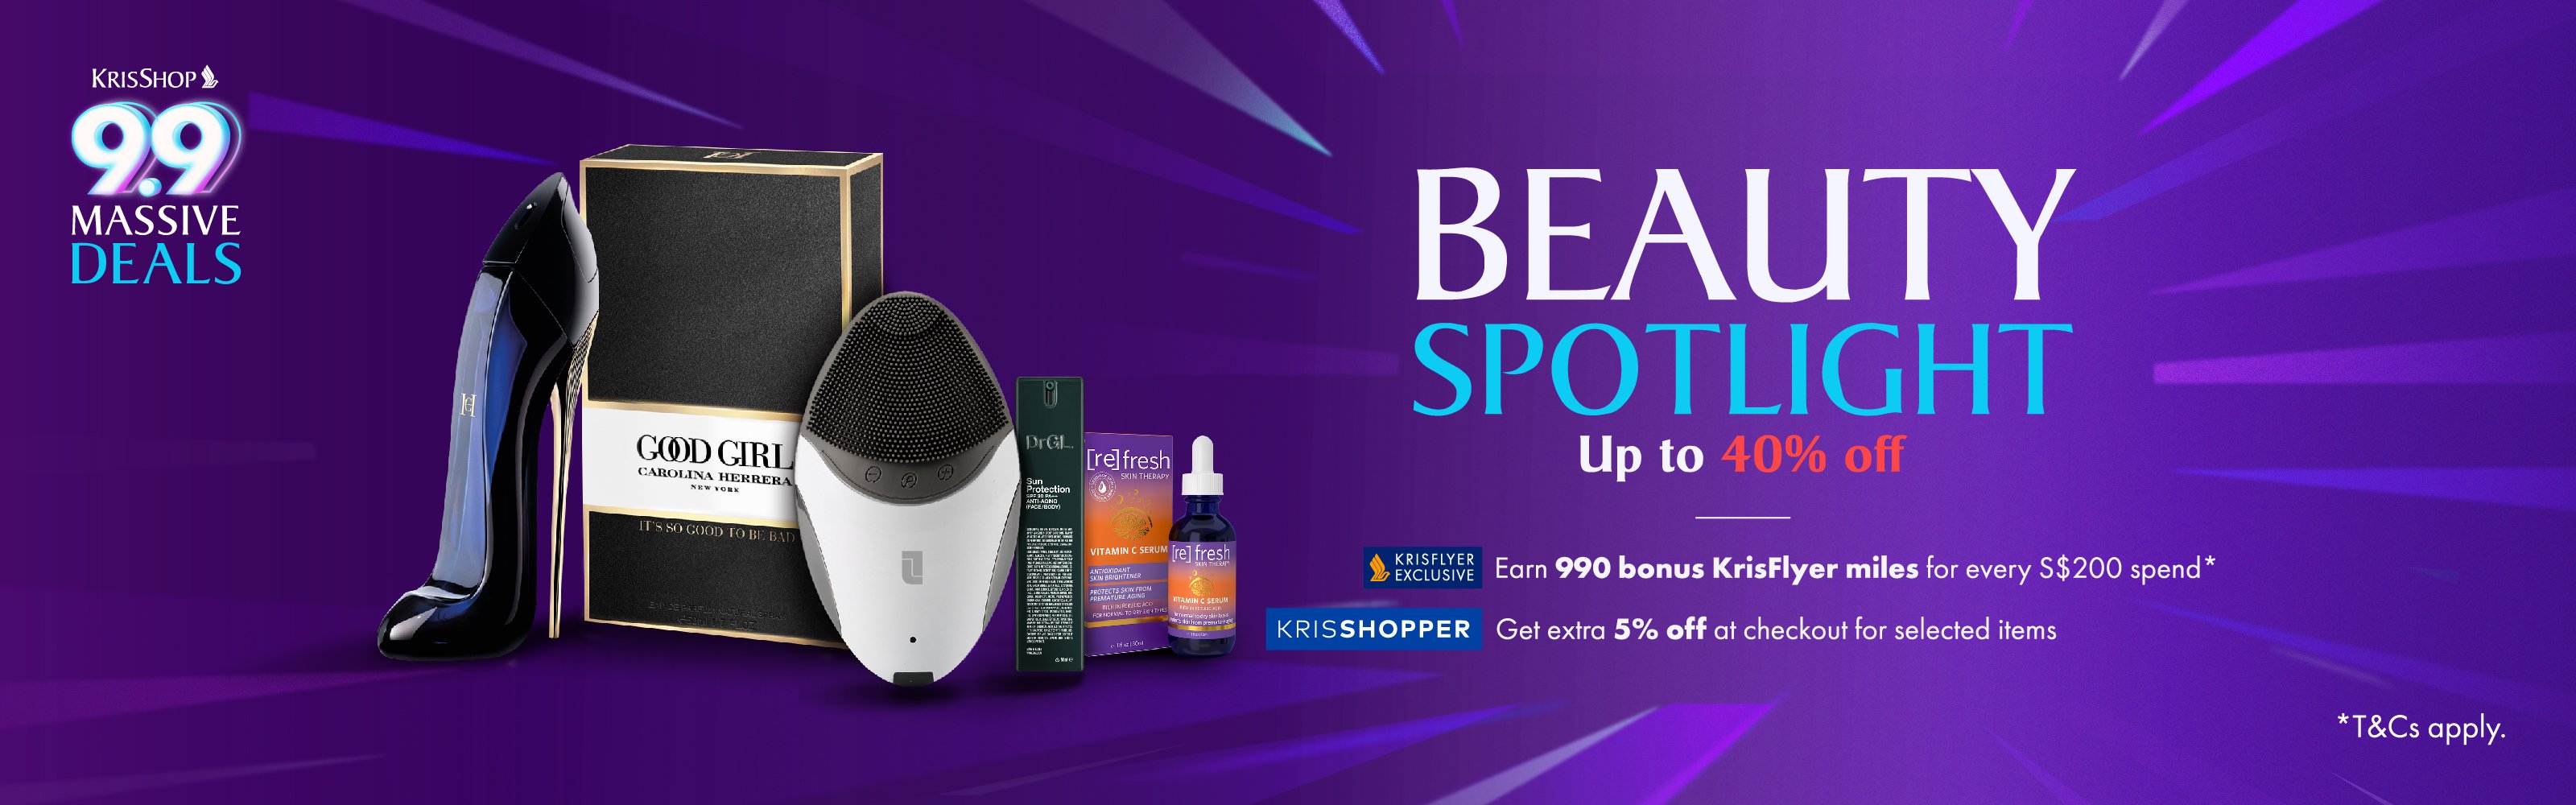 KrisShop's 9.9 Massive Deals - Up to 40% off Beauty